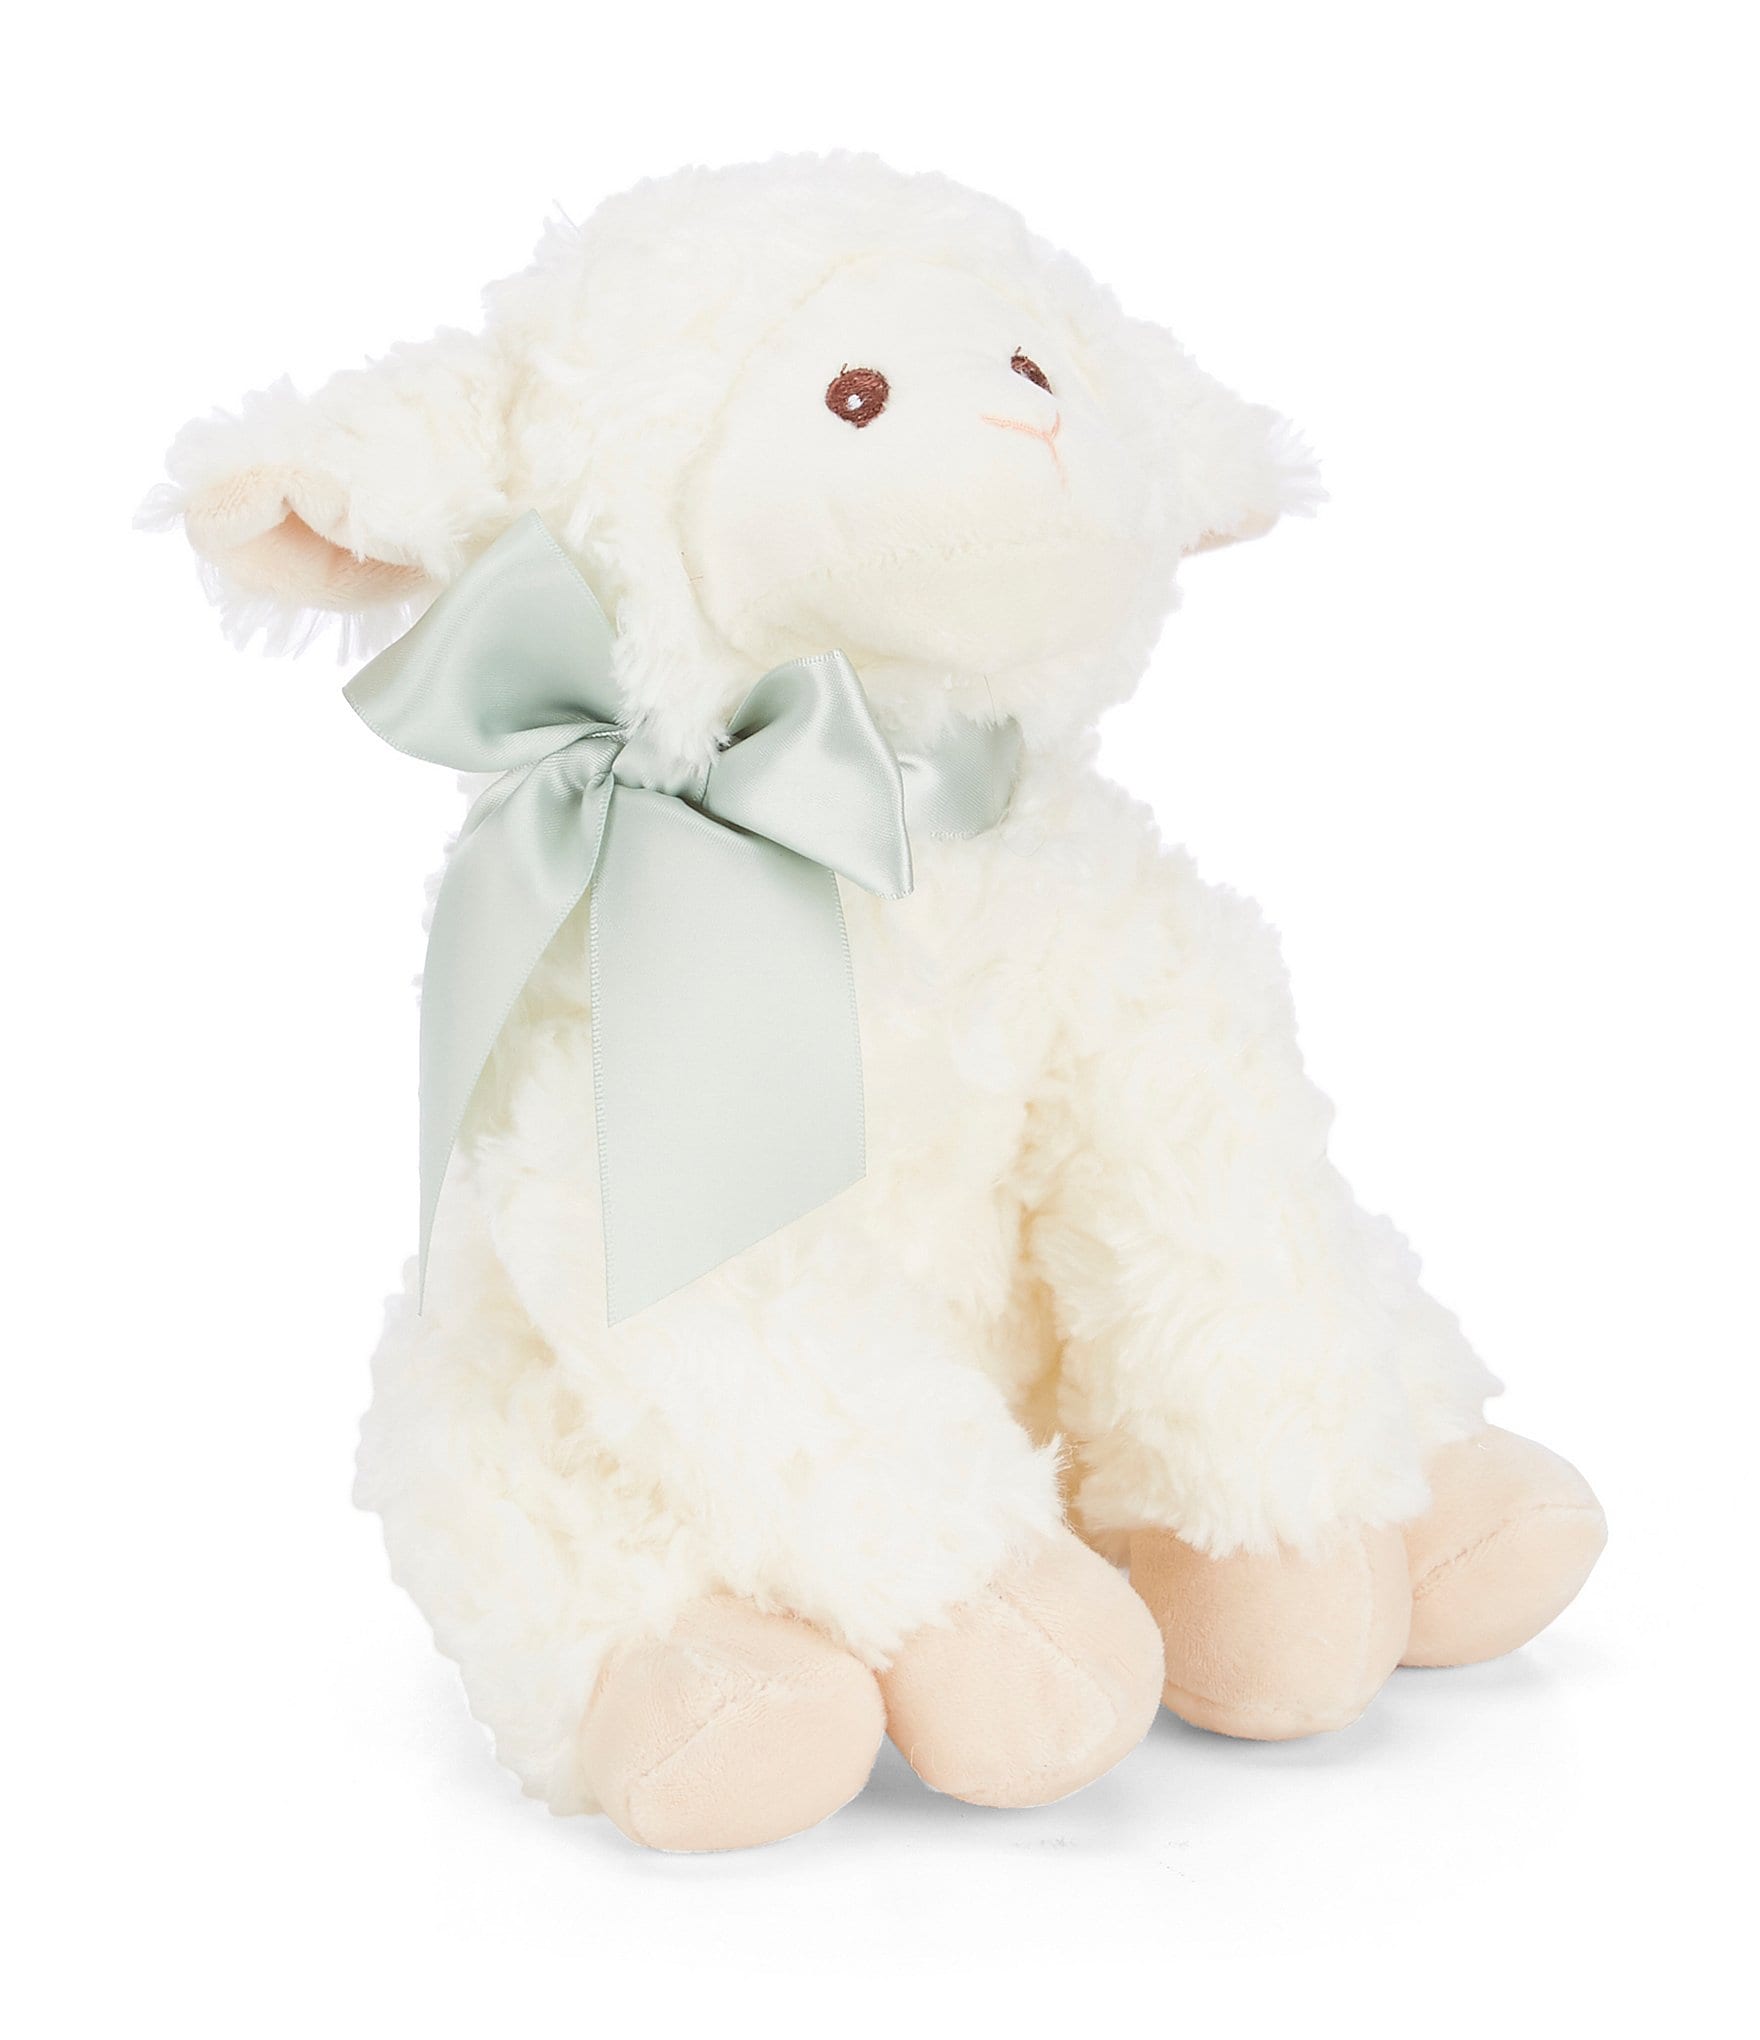 musical lamb stuffed animal